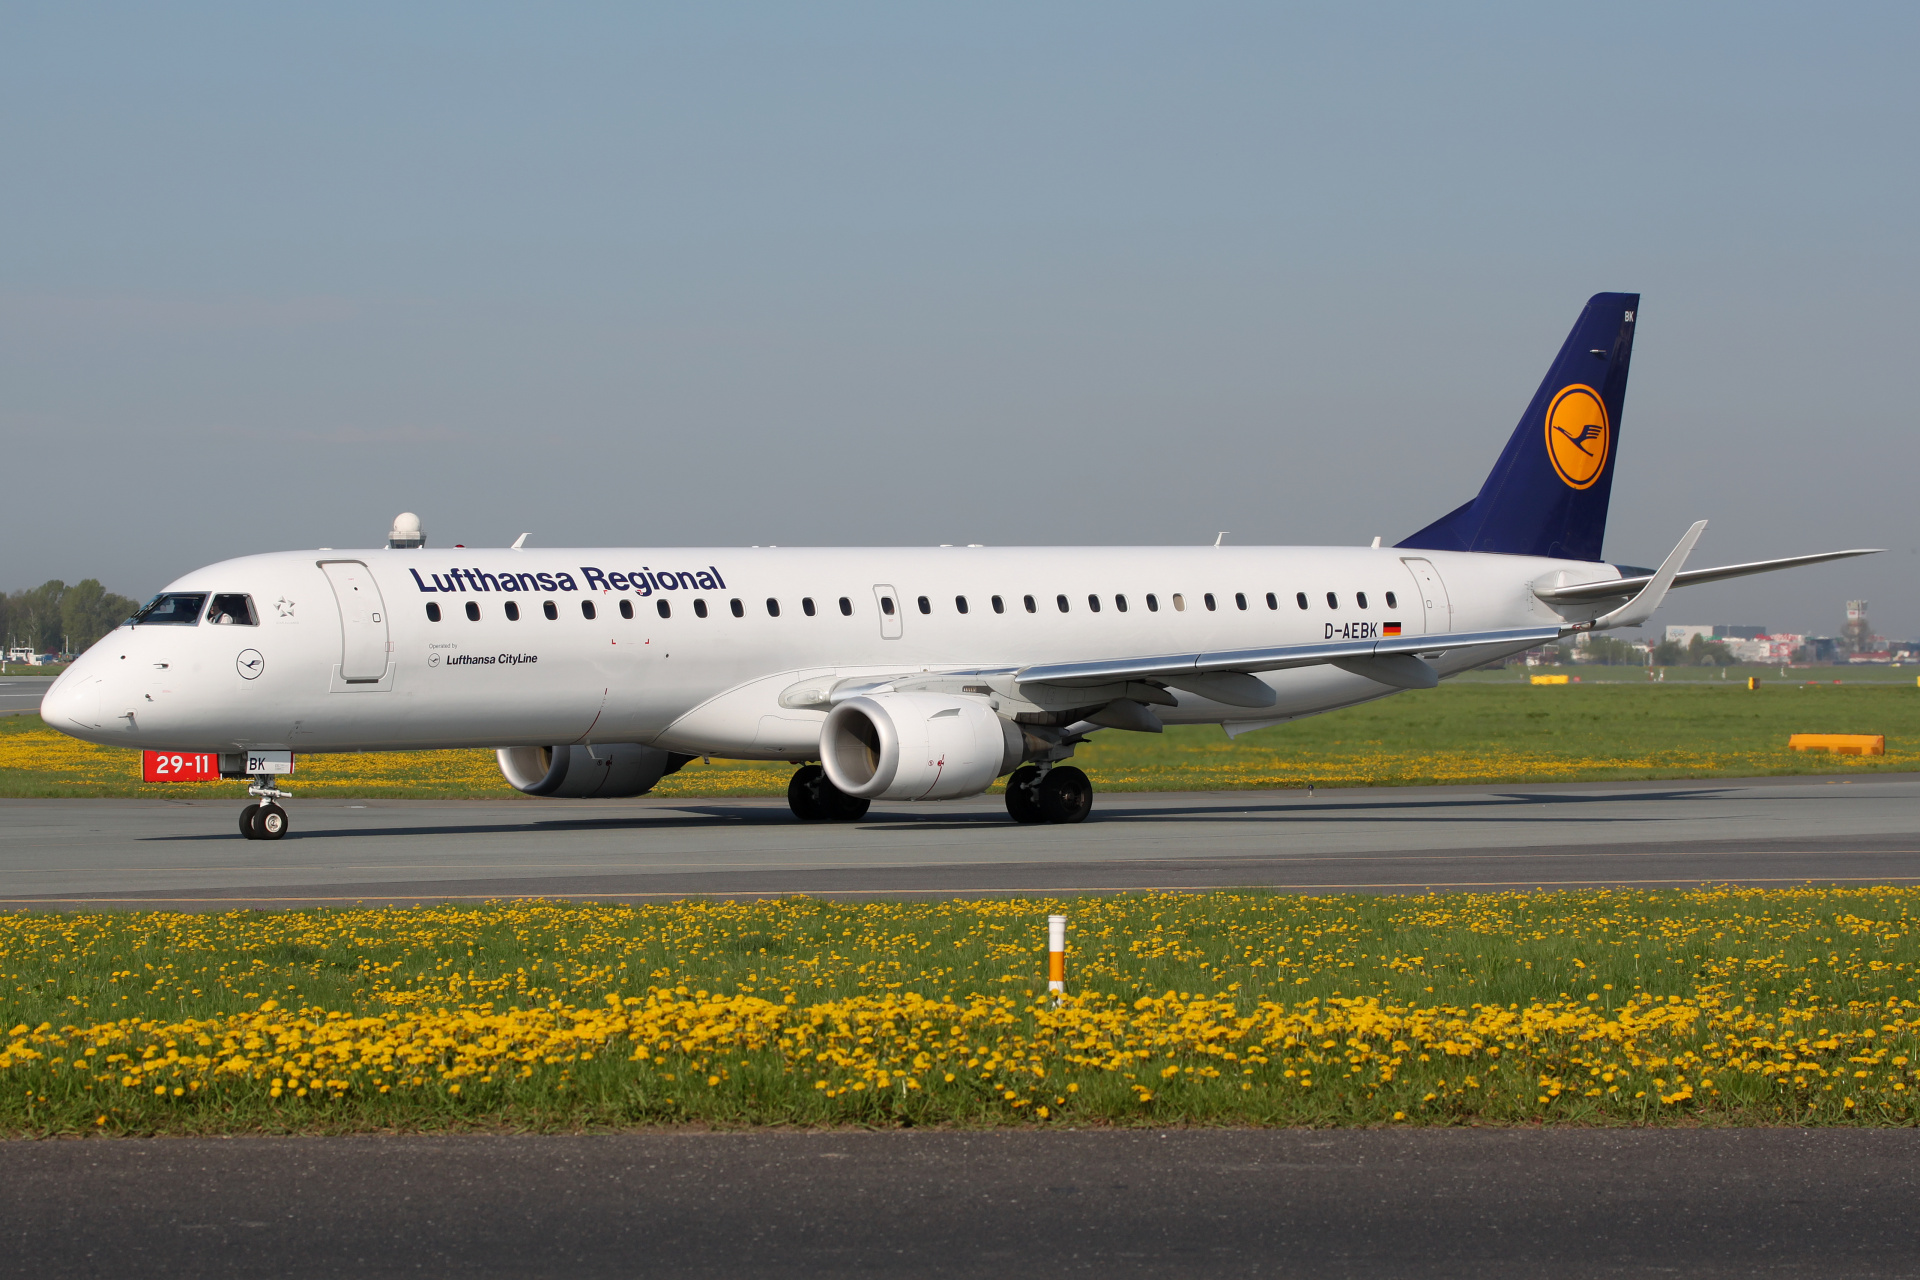 D-AEBK (Lufthansa CityLine) (Aircraft » EPWA Spotting » Embraer E195 » Lufthansa Regional)